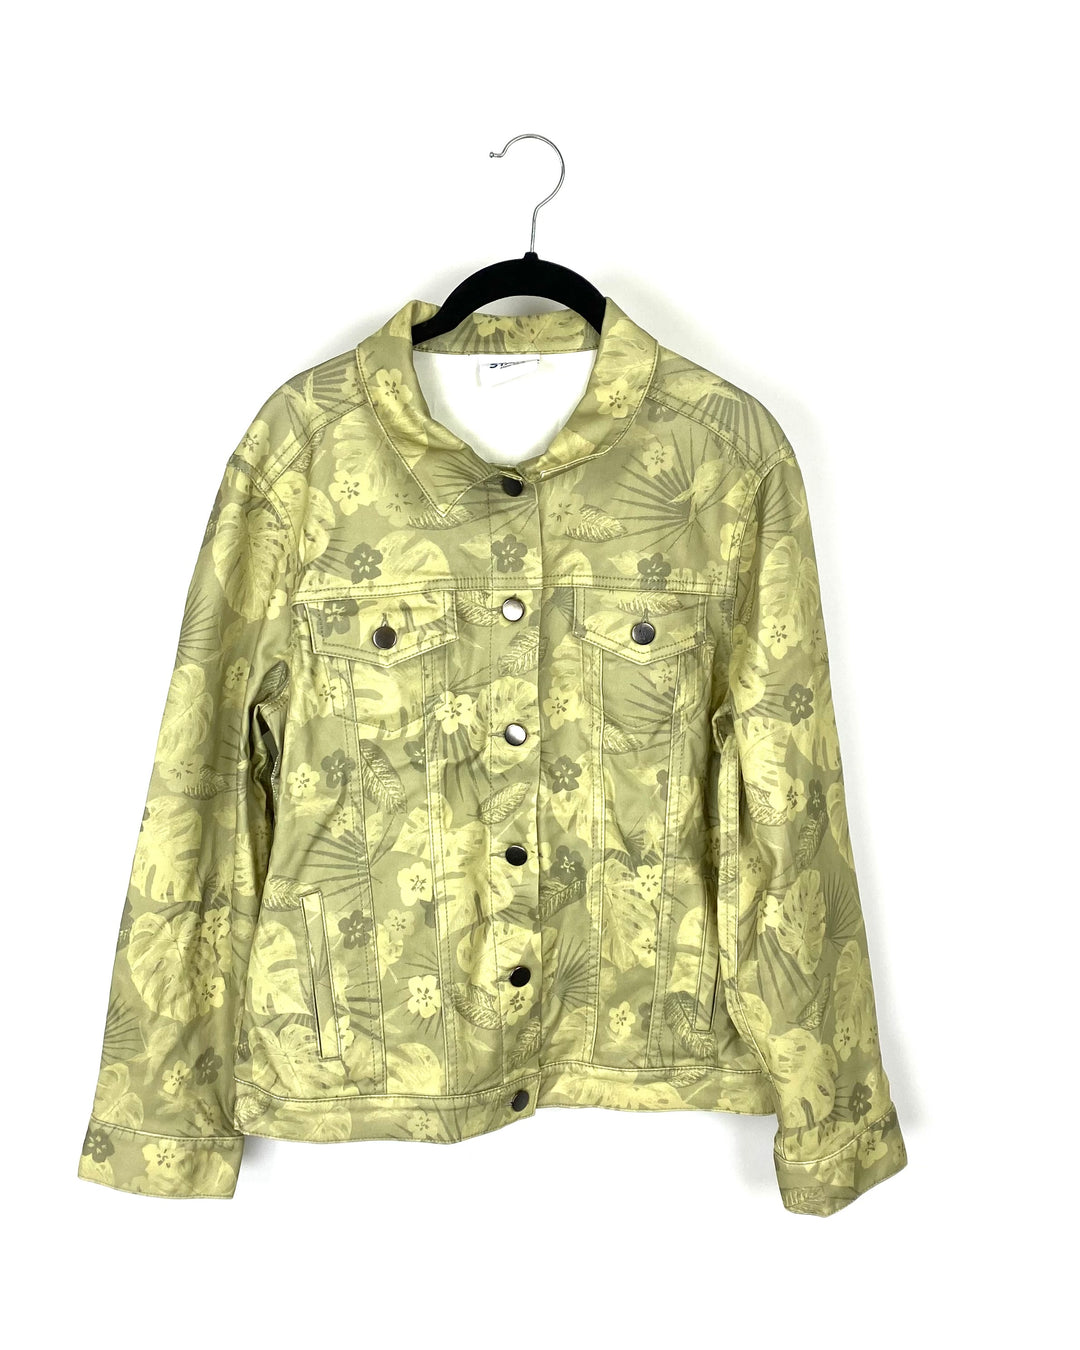 Green Floral Print Jacket - Small